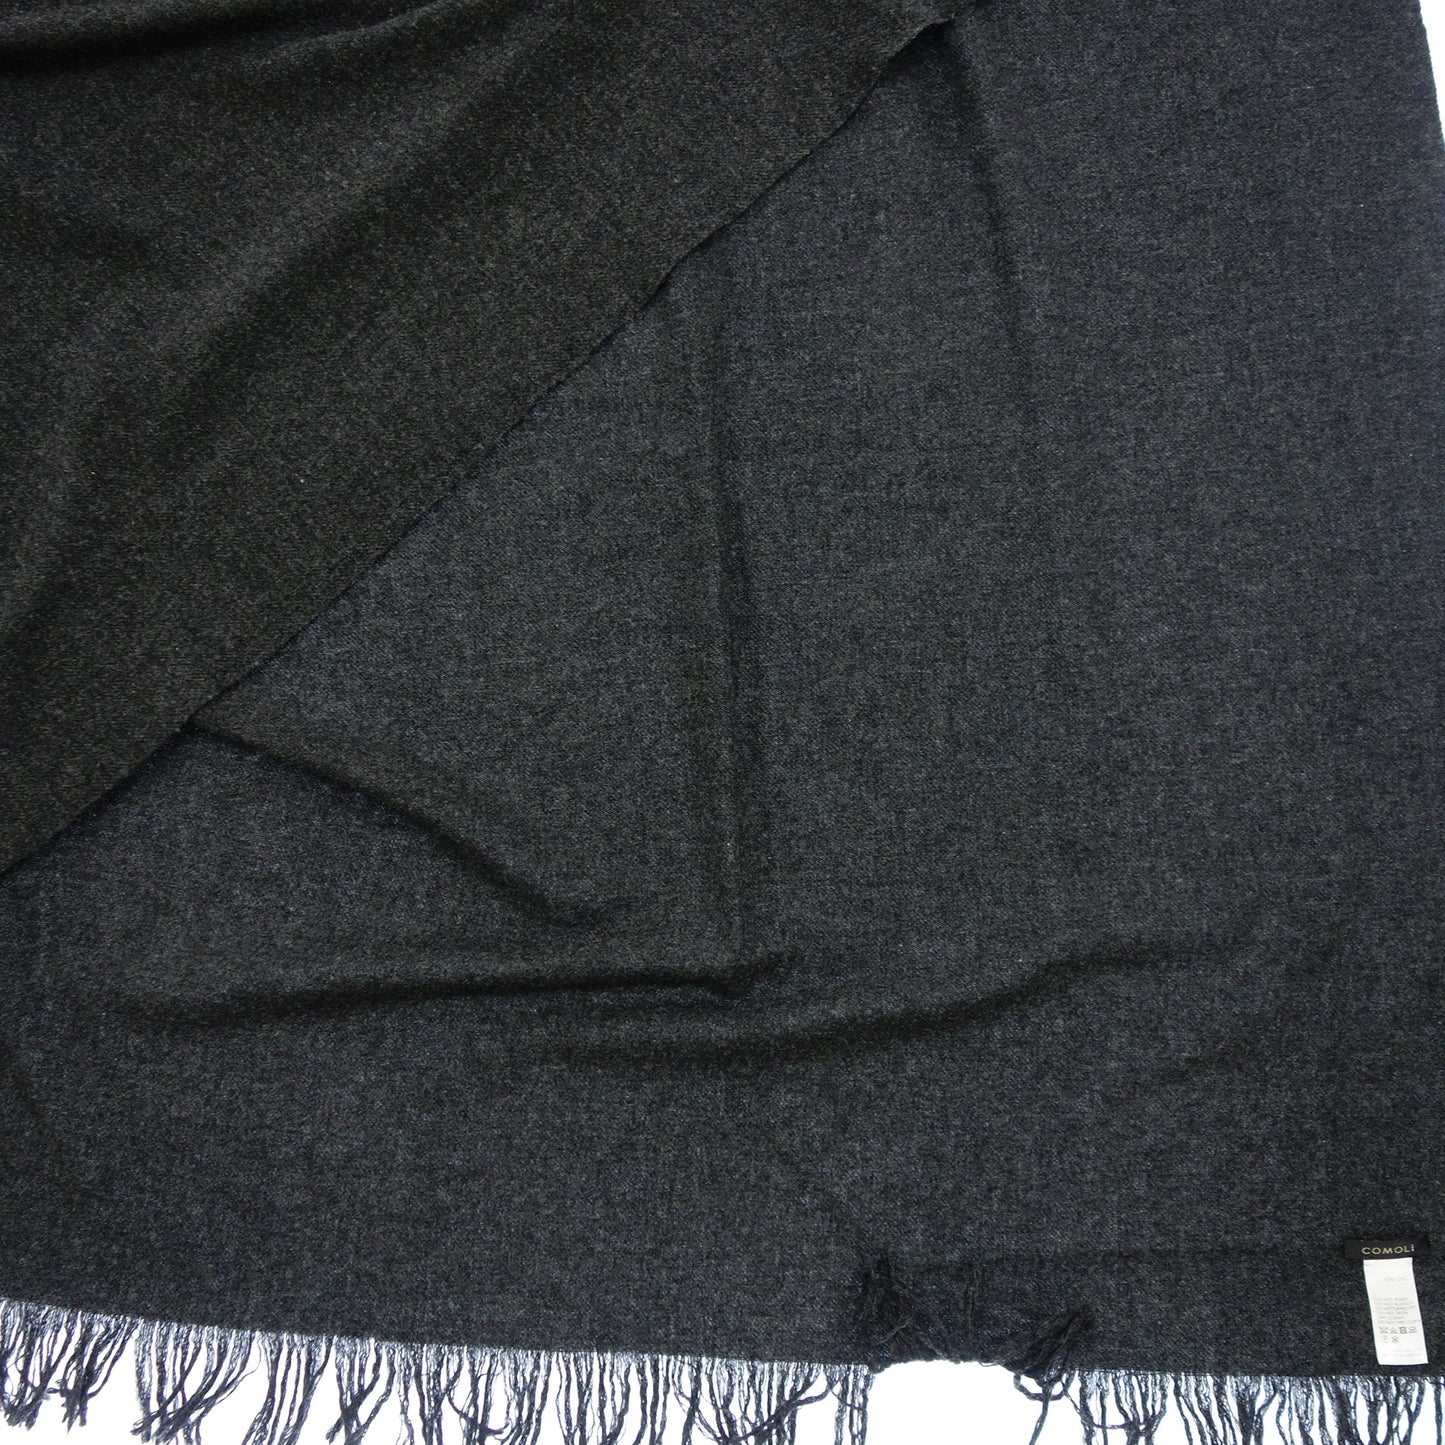 COMOLI Wool Stole W03-07001 Dark Gray COMOLI [AFI19] [Used] 